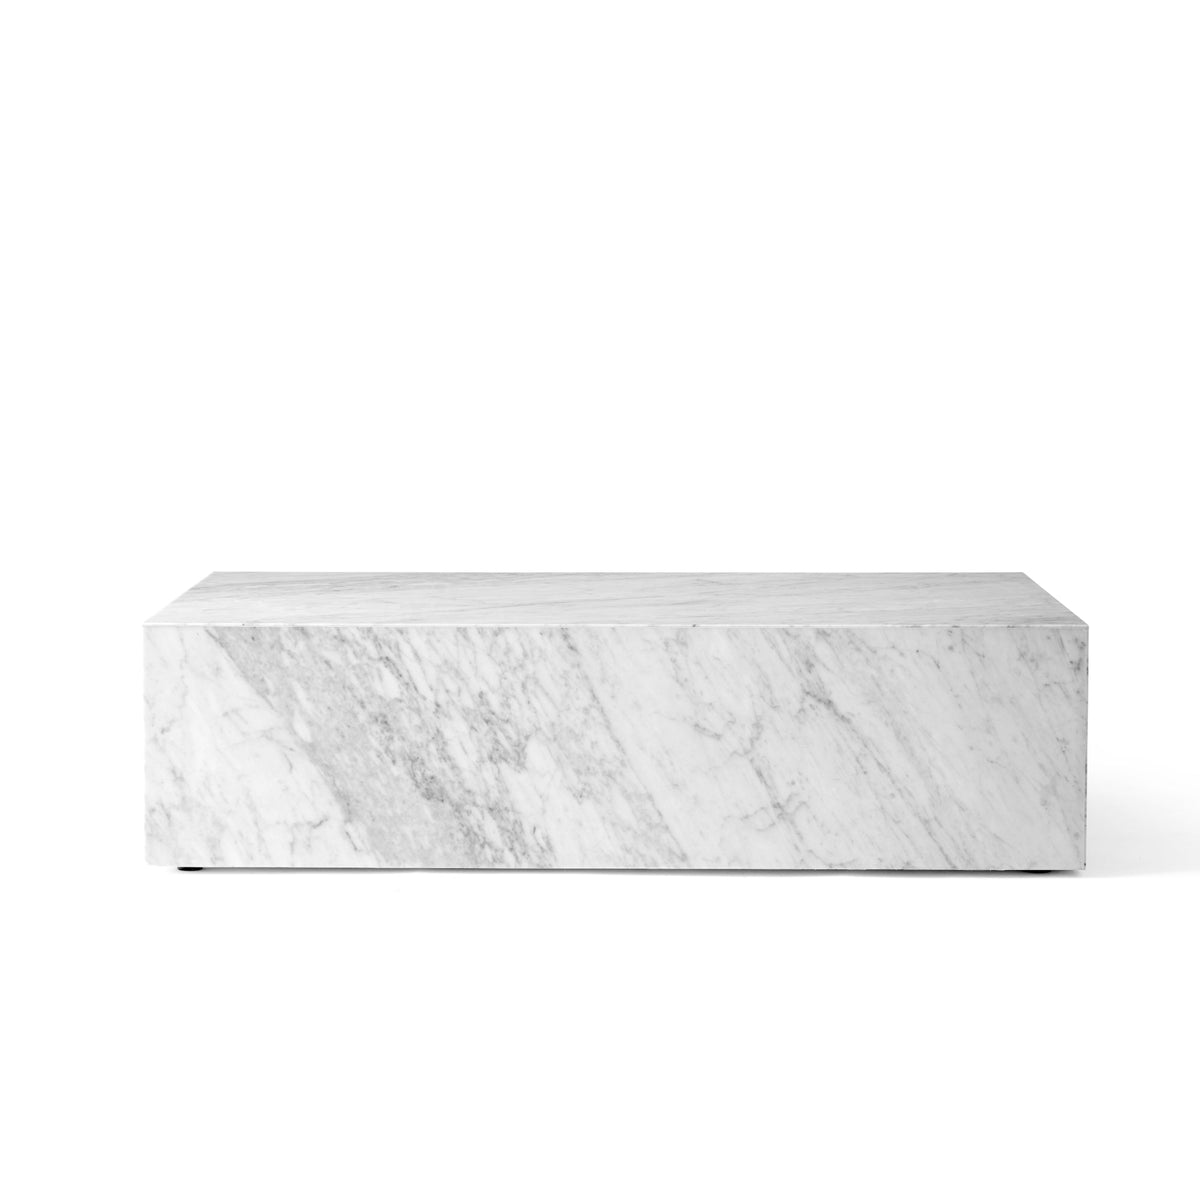 Menu Plinth matala sohvapöytä Carrara marmori - Laatukaluste